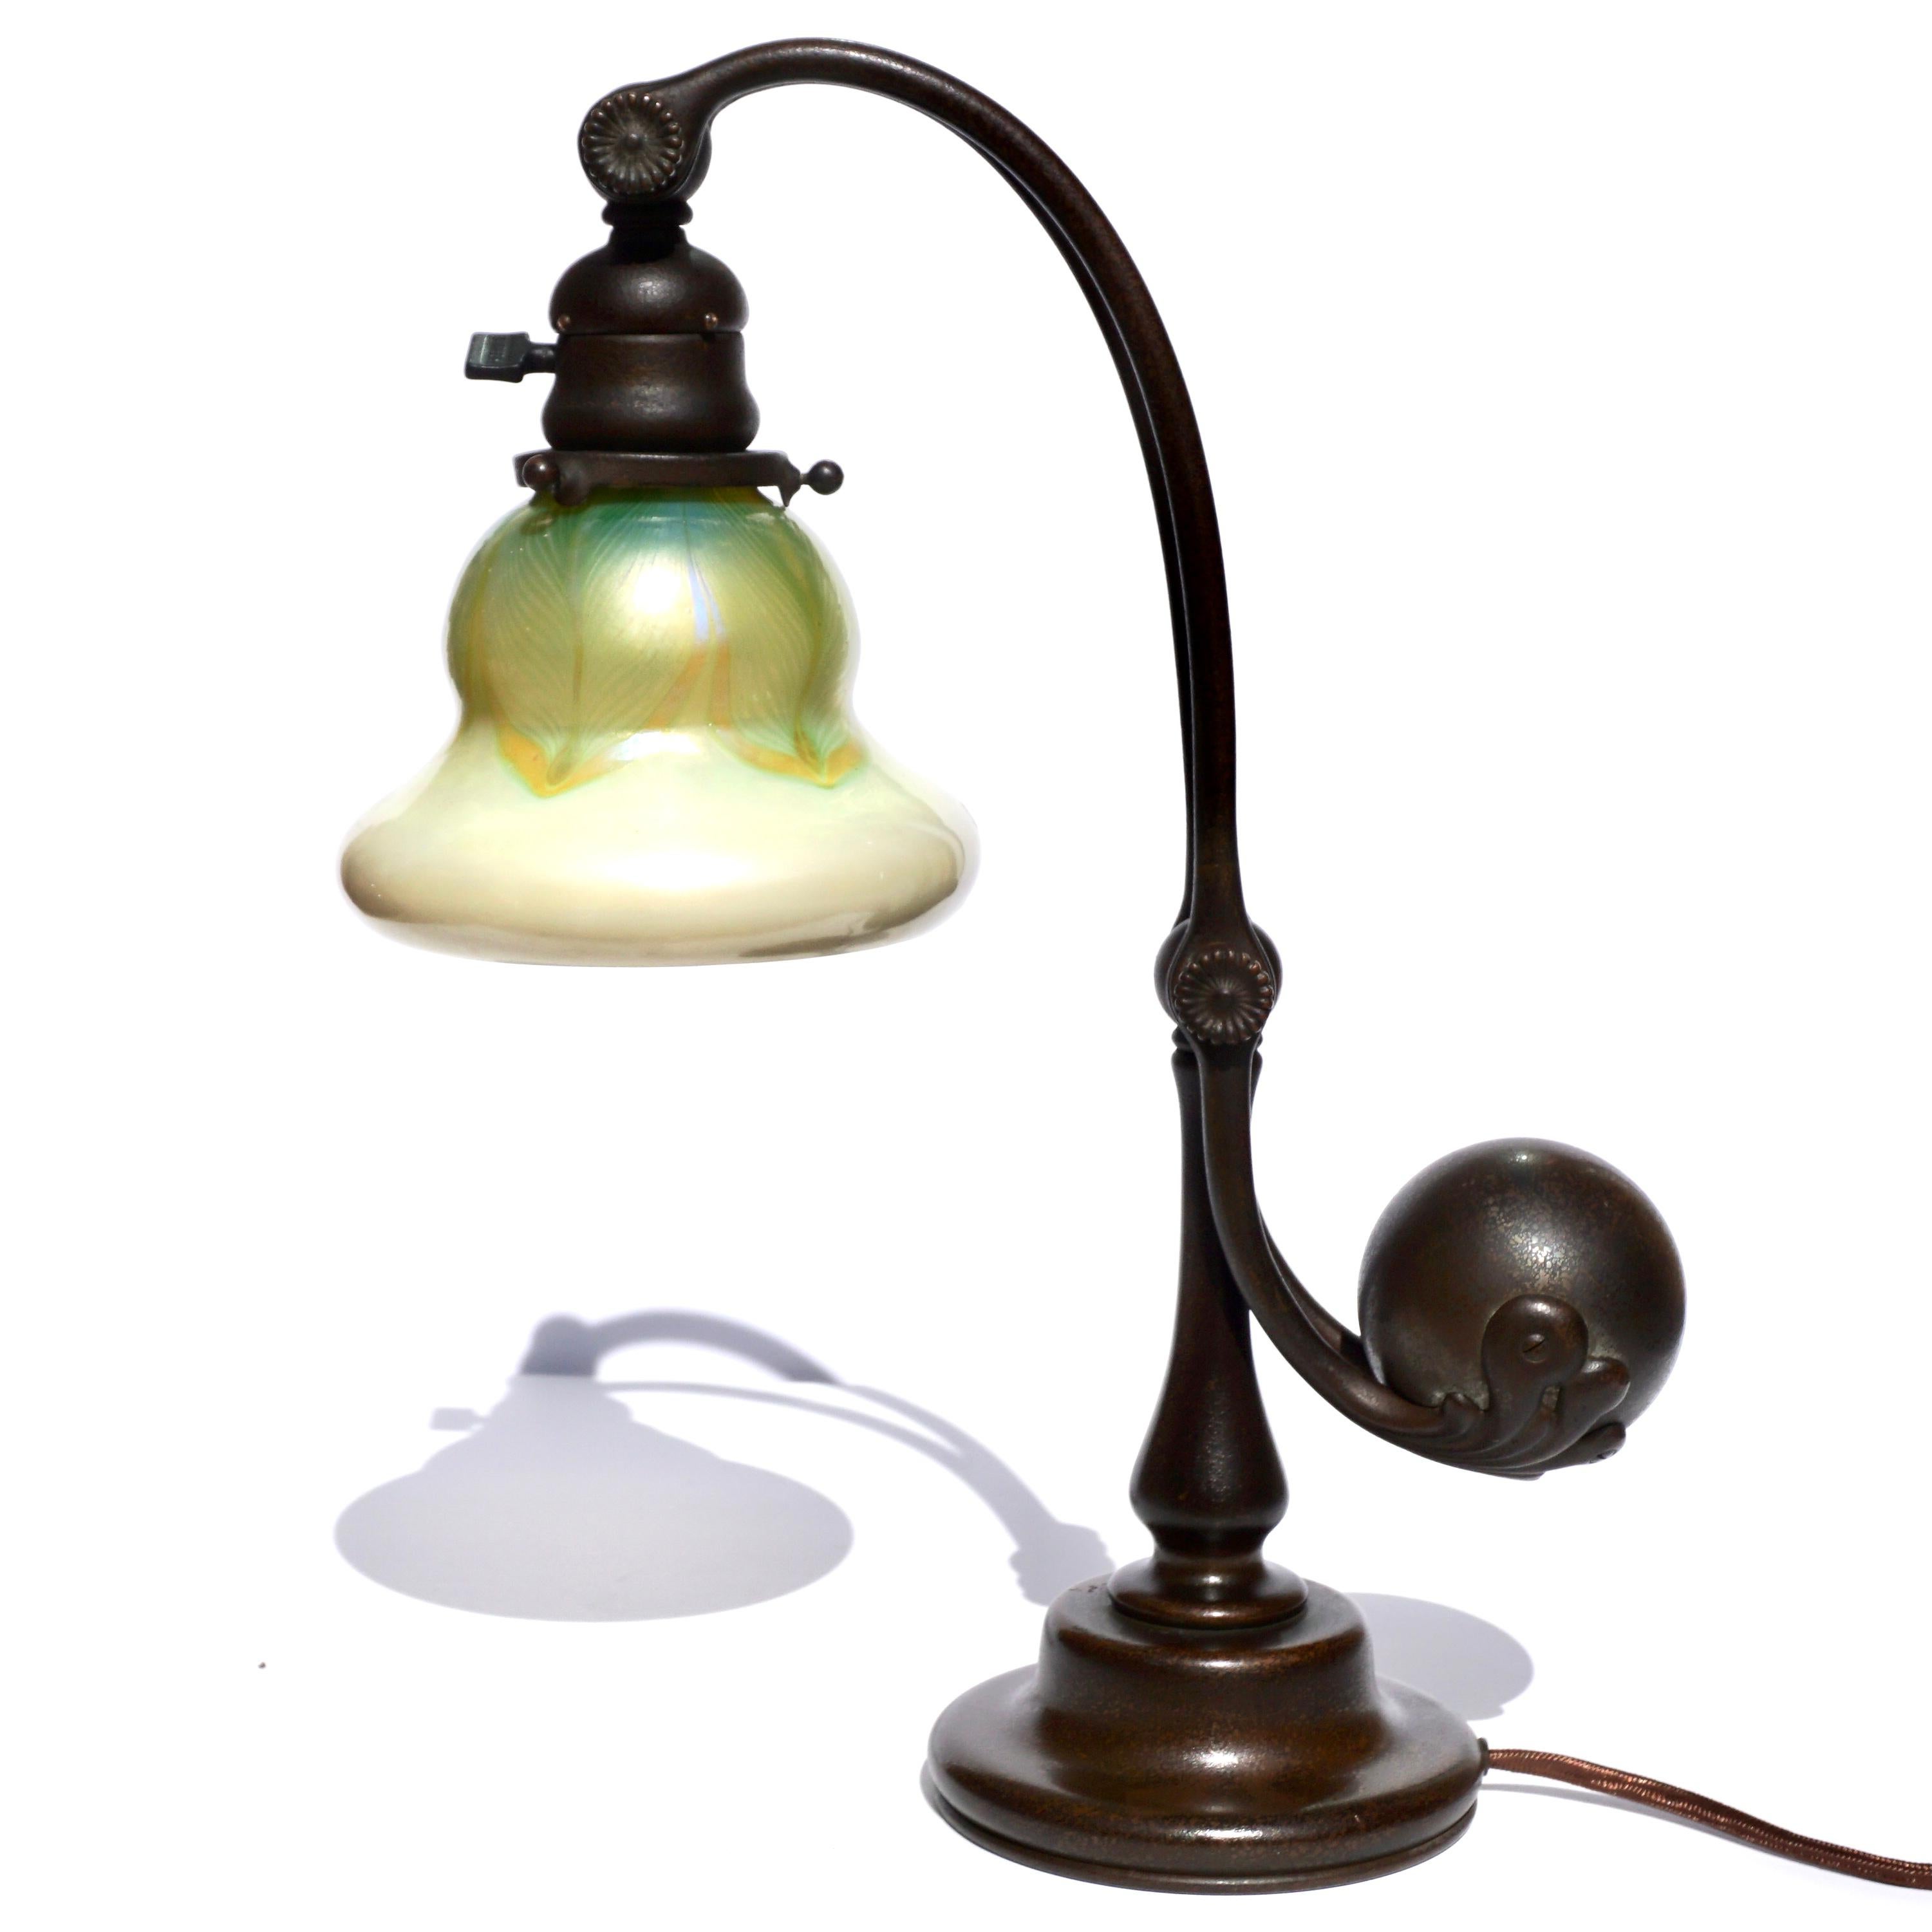 Art Nouveau Tiffany Studios Counter Balance Table Lamp